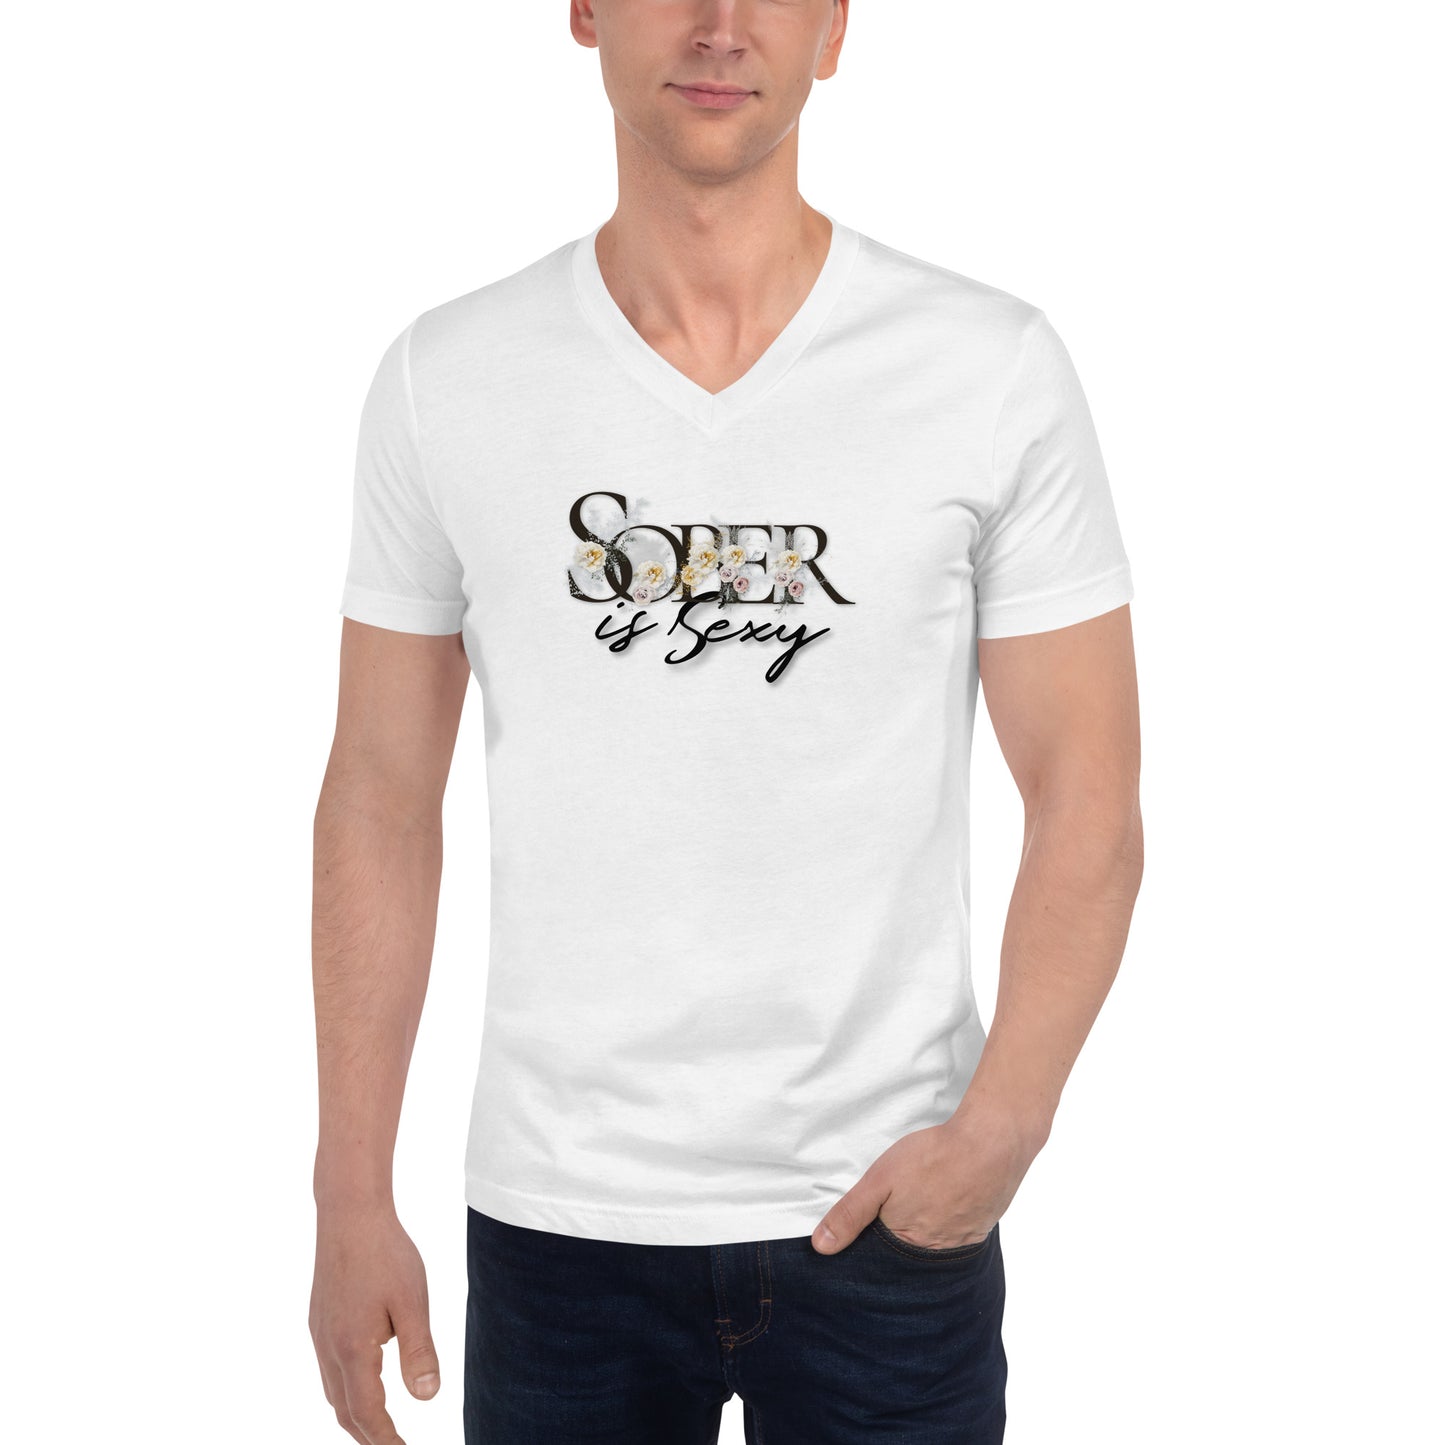 Sober is Sexy - Unisex Short Sleeve V-Neck T-Shirt